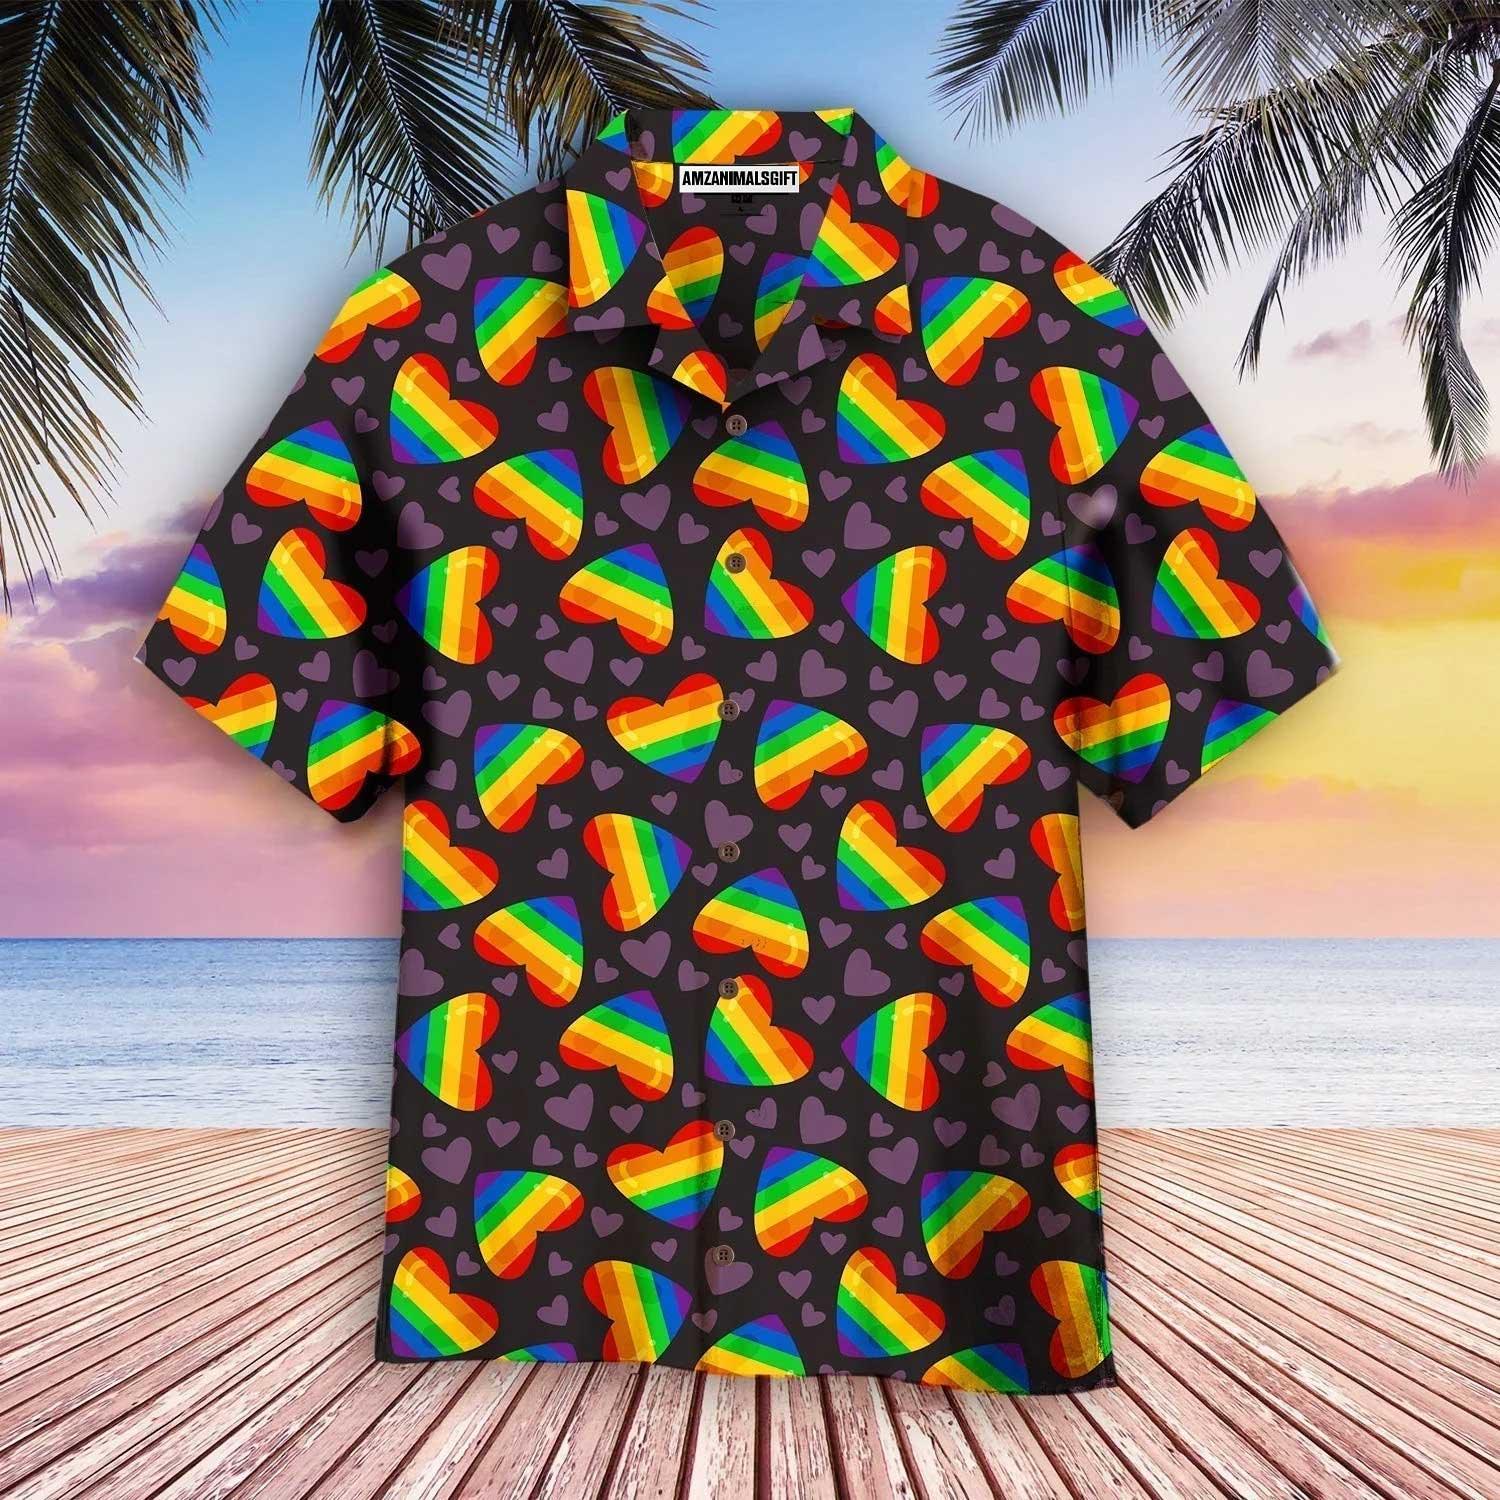 LGBT Aloha Hawaiian Shirts For Summer, Heart Rainbow Colorful LGBT Pride Day Hawaiian Shirts, Gift For Gaymer And Lesbian, Friend, Team - Amzanimalsgift